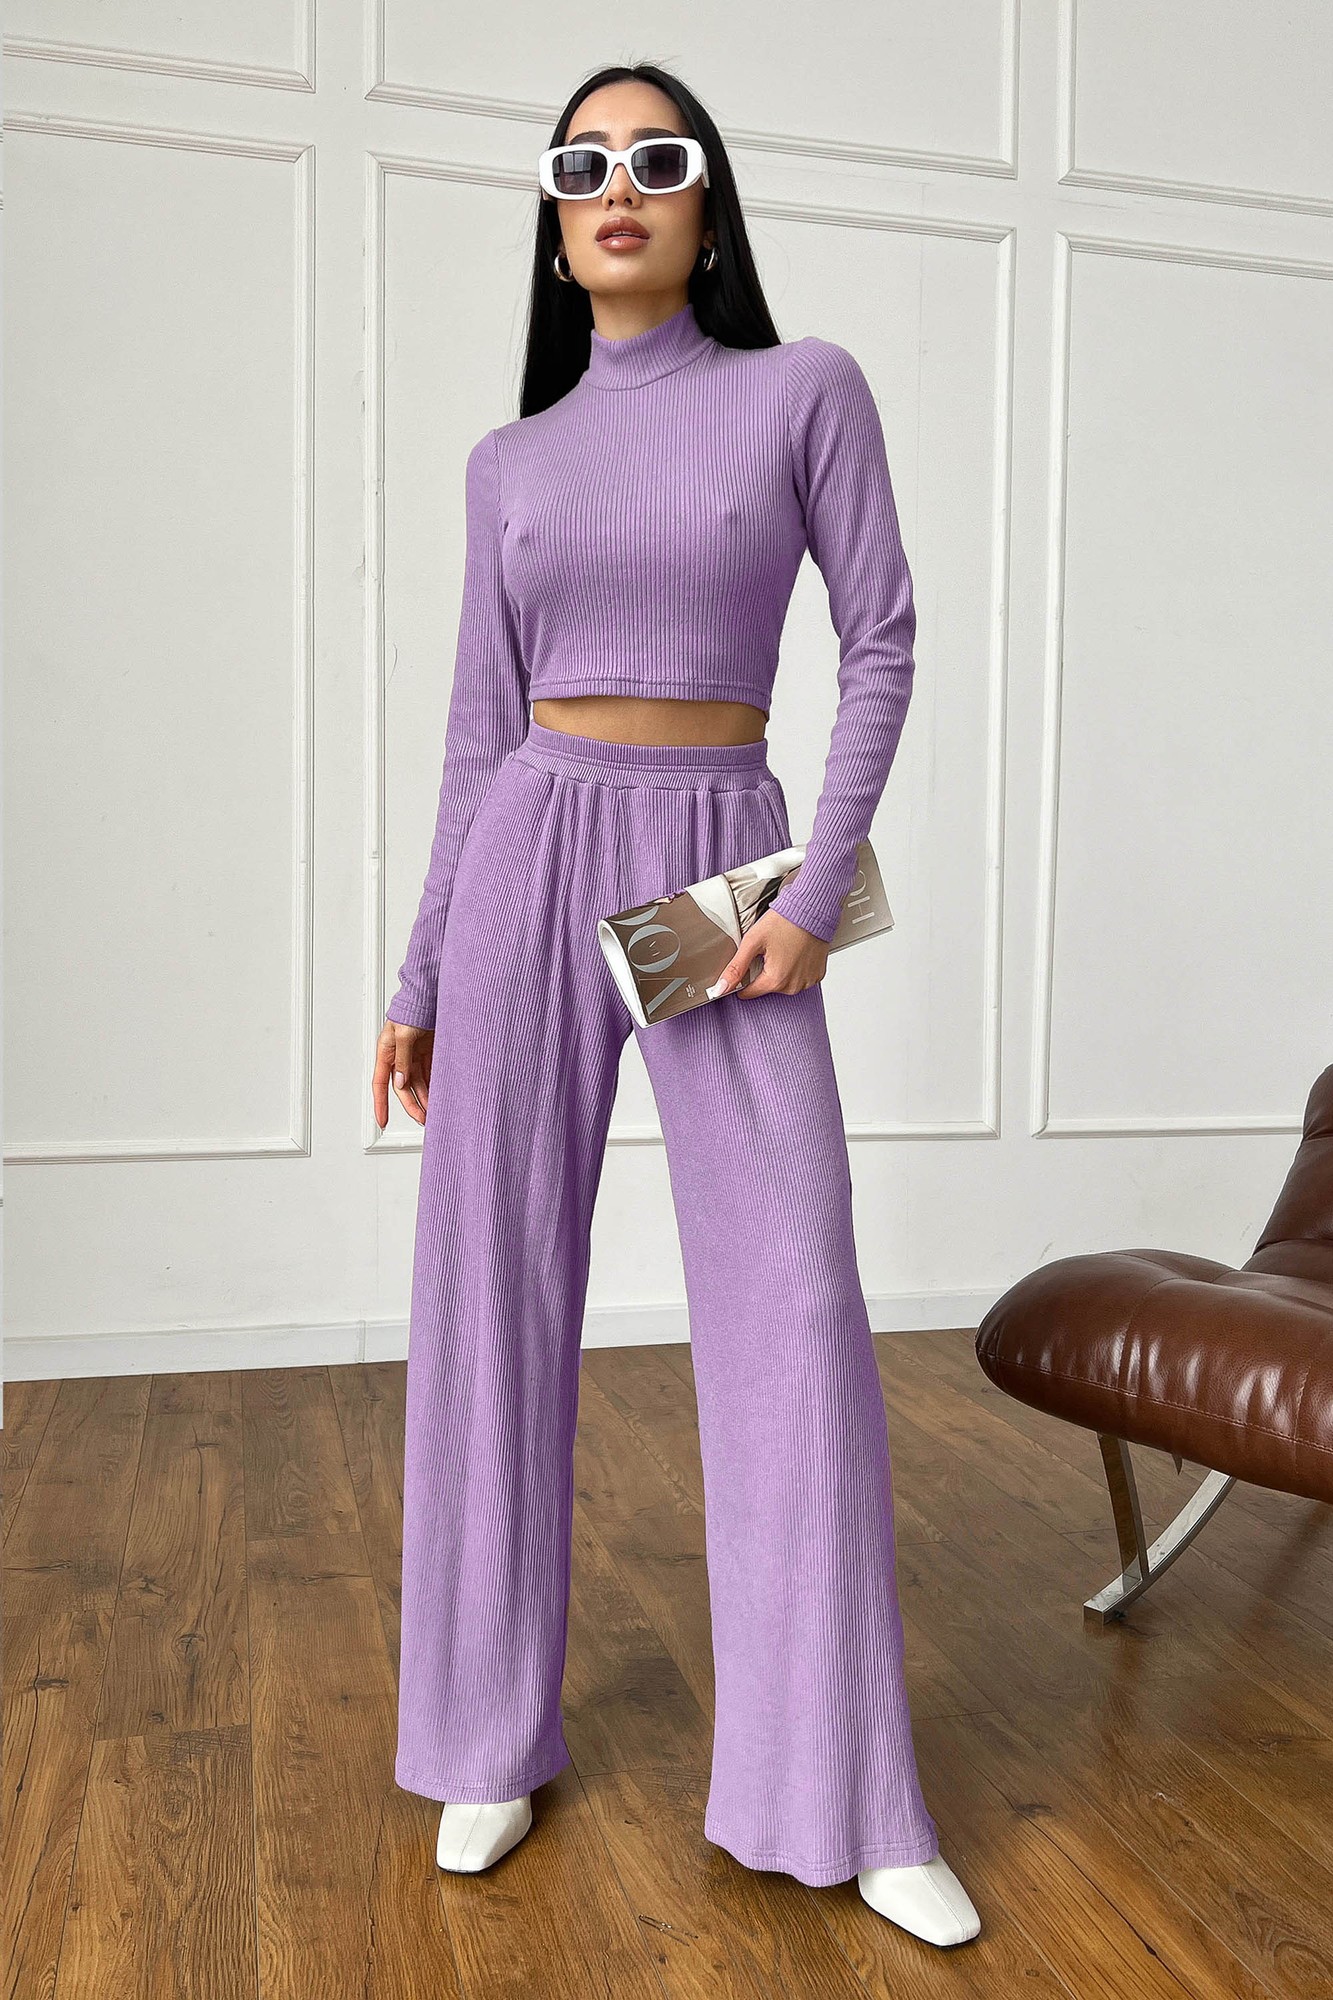 Stylish suit in violet color